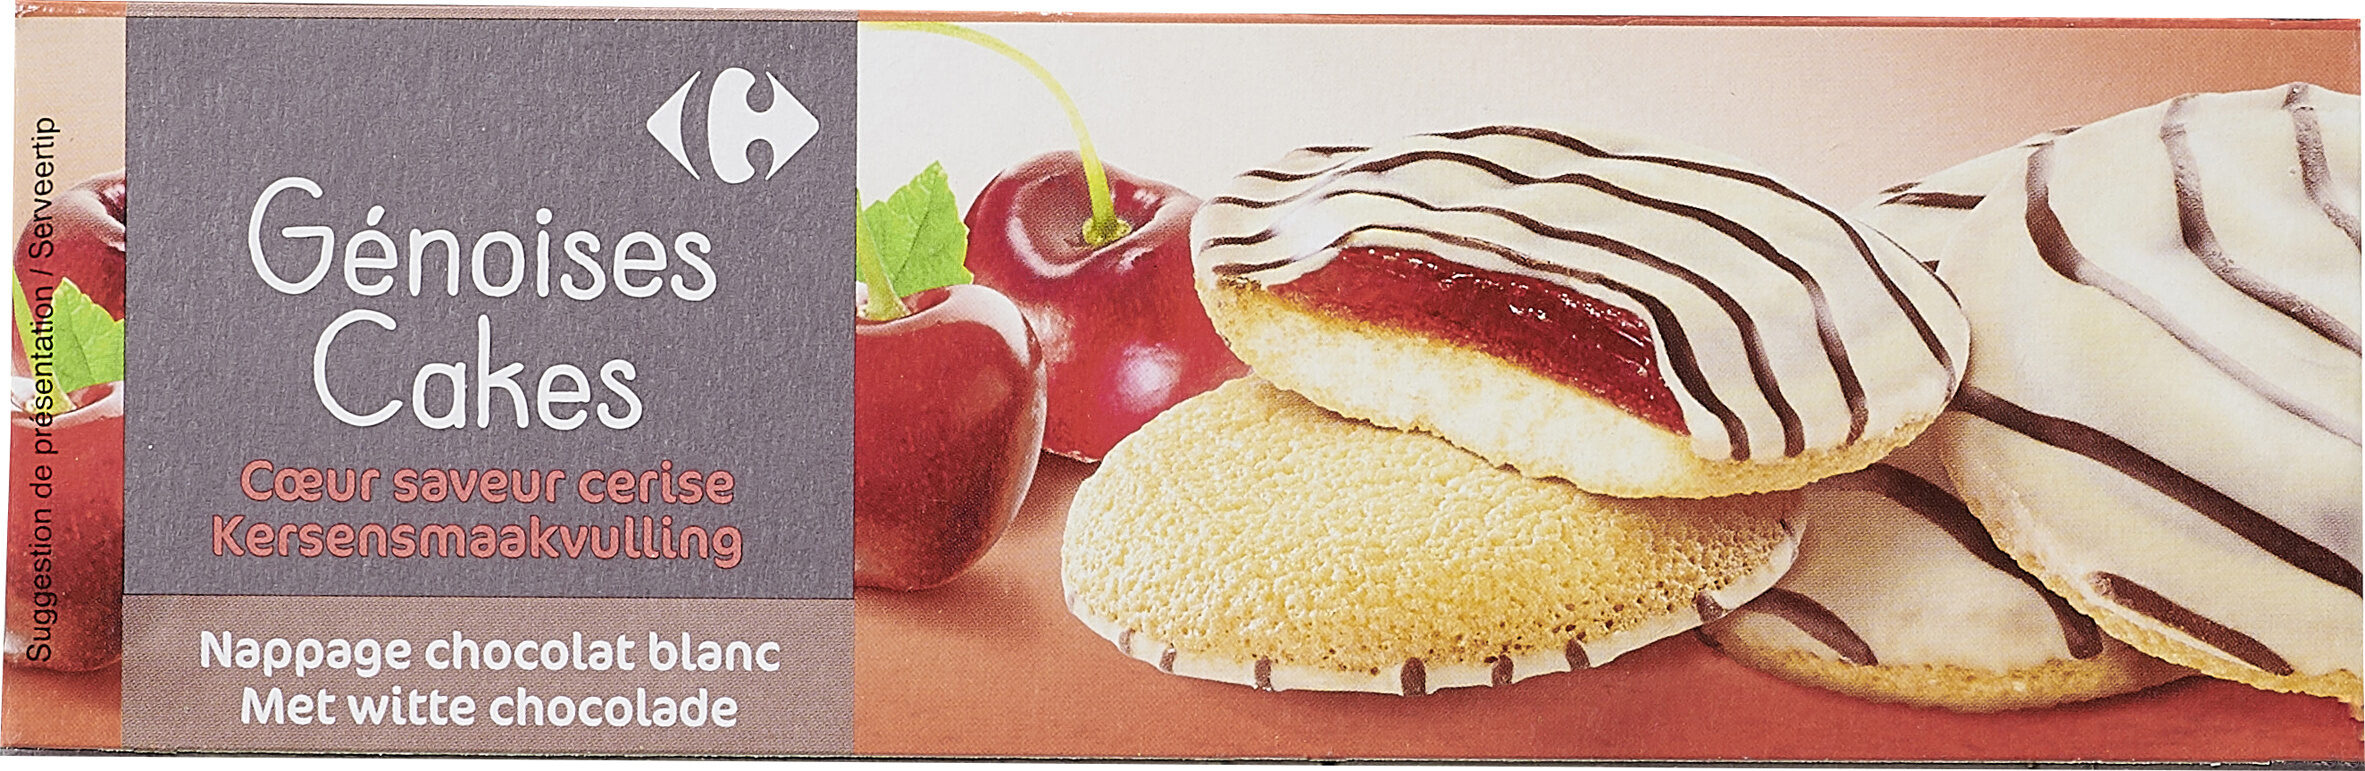 Genoises cakes saveur cerise - Prodotto - fr